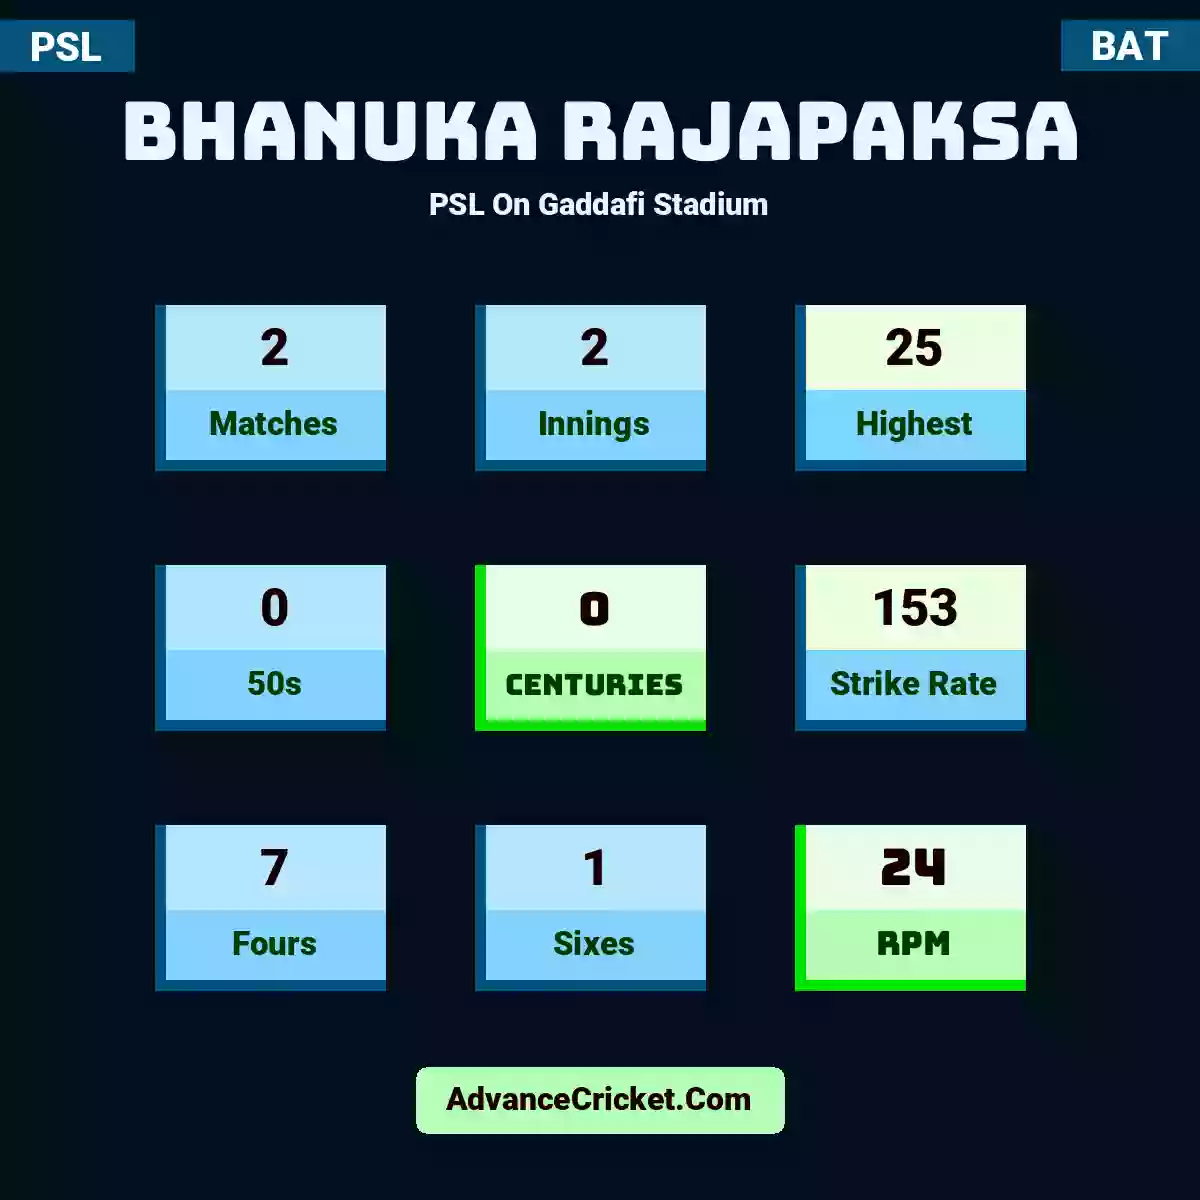 Bhanuka Rajapaksa PSL  On Gaddafi Stadium, Bhanuka Rajapaksa played 2 matches, scored 25 runs as highest, 0 half-centuries, and 0 centuries, with a strike rate of 153. B.Rajapaksa hit 7 fours and 1 sixes, with an RPM of 24.